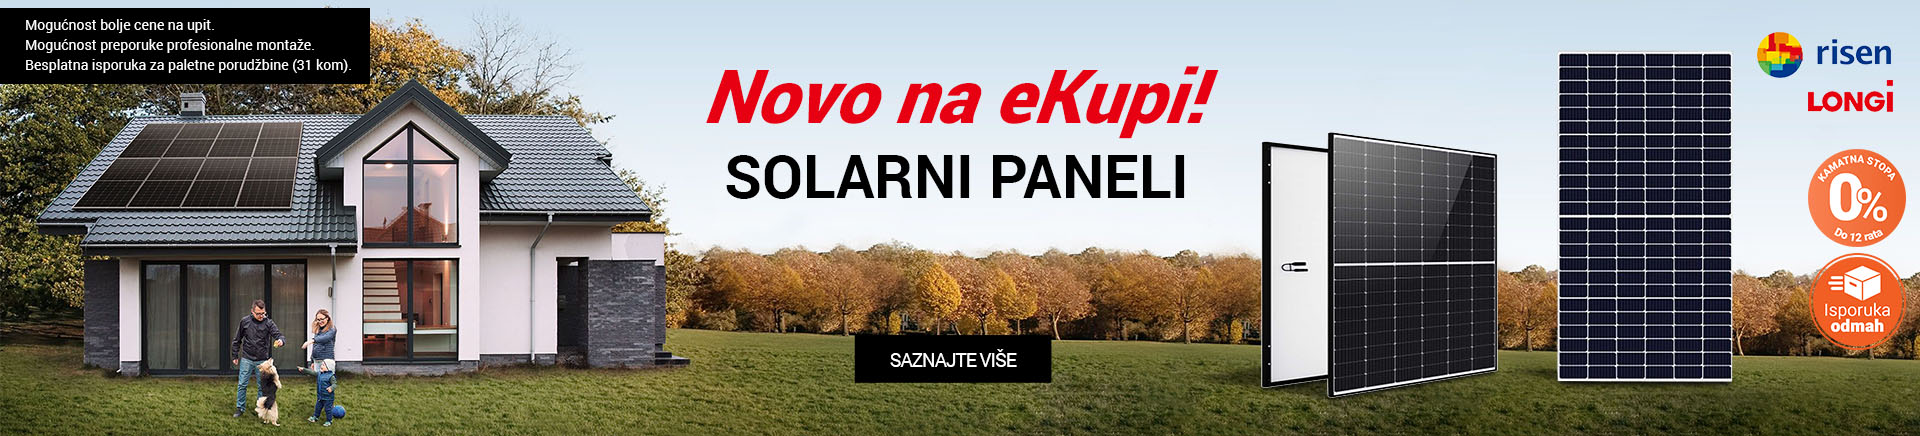 RS Solarni paneliMOBILE 380 X 436.jpg